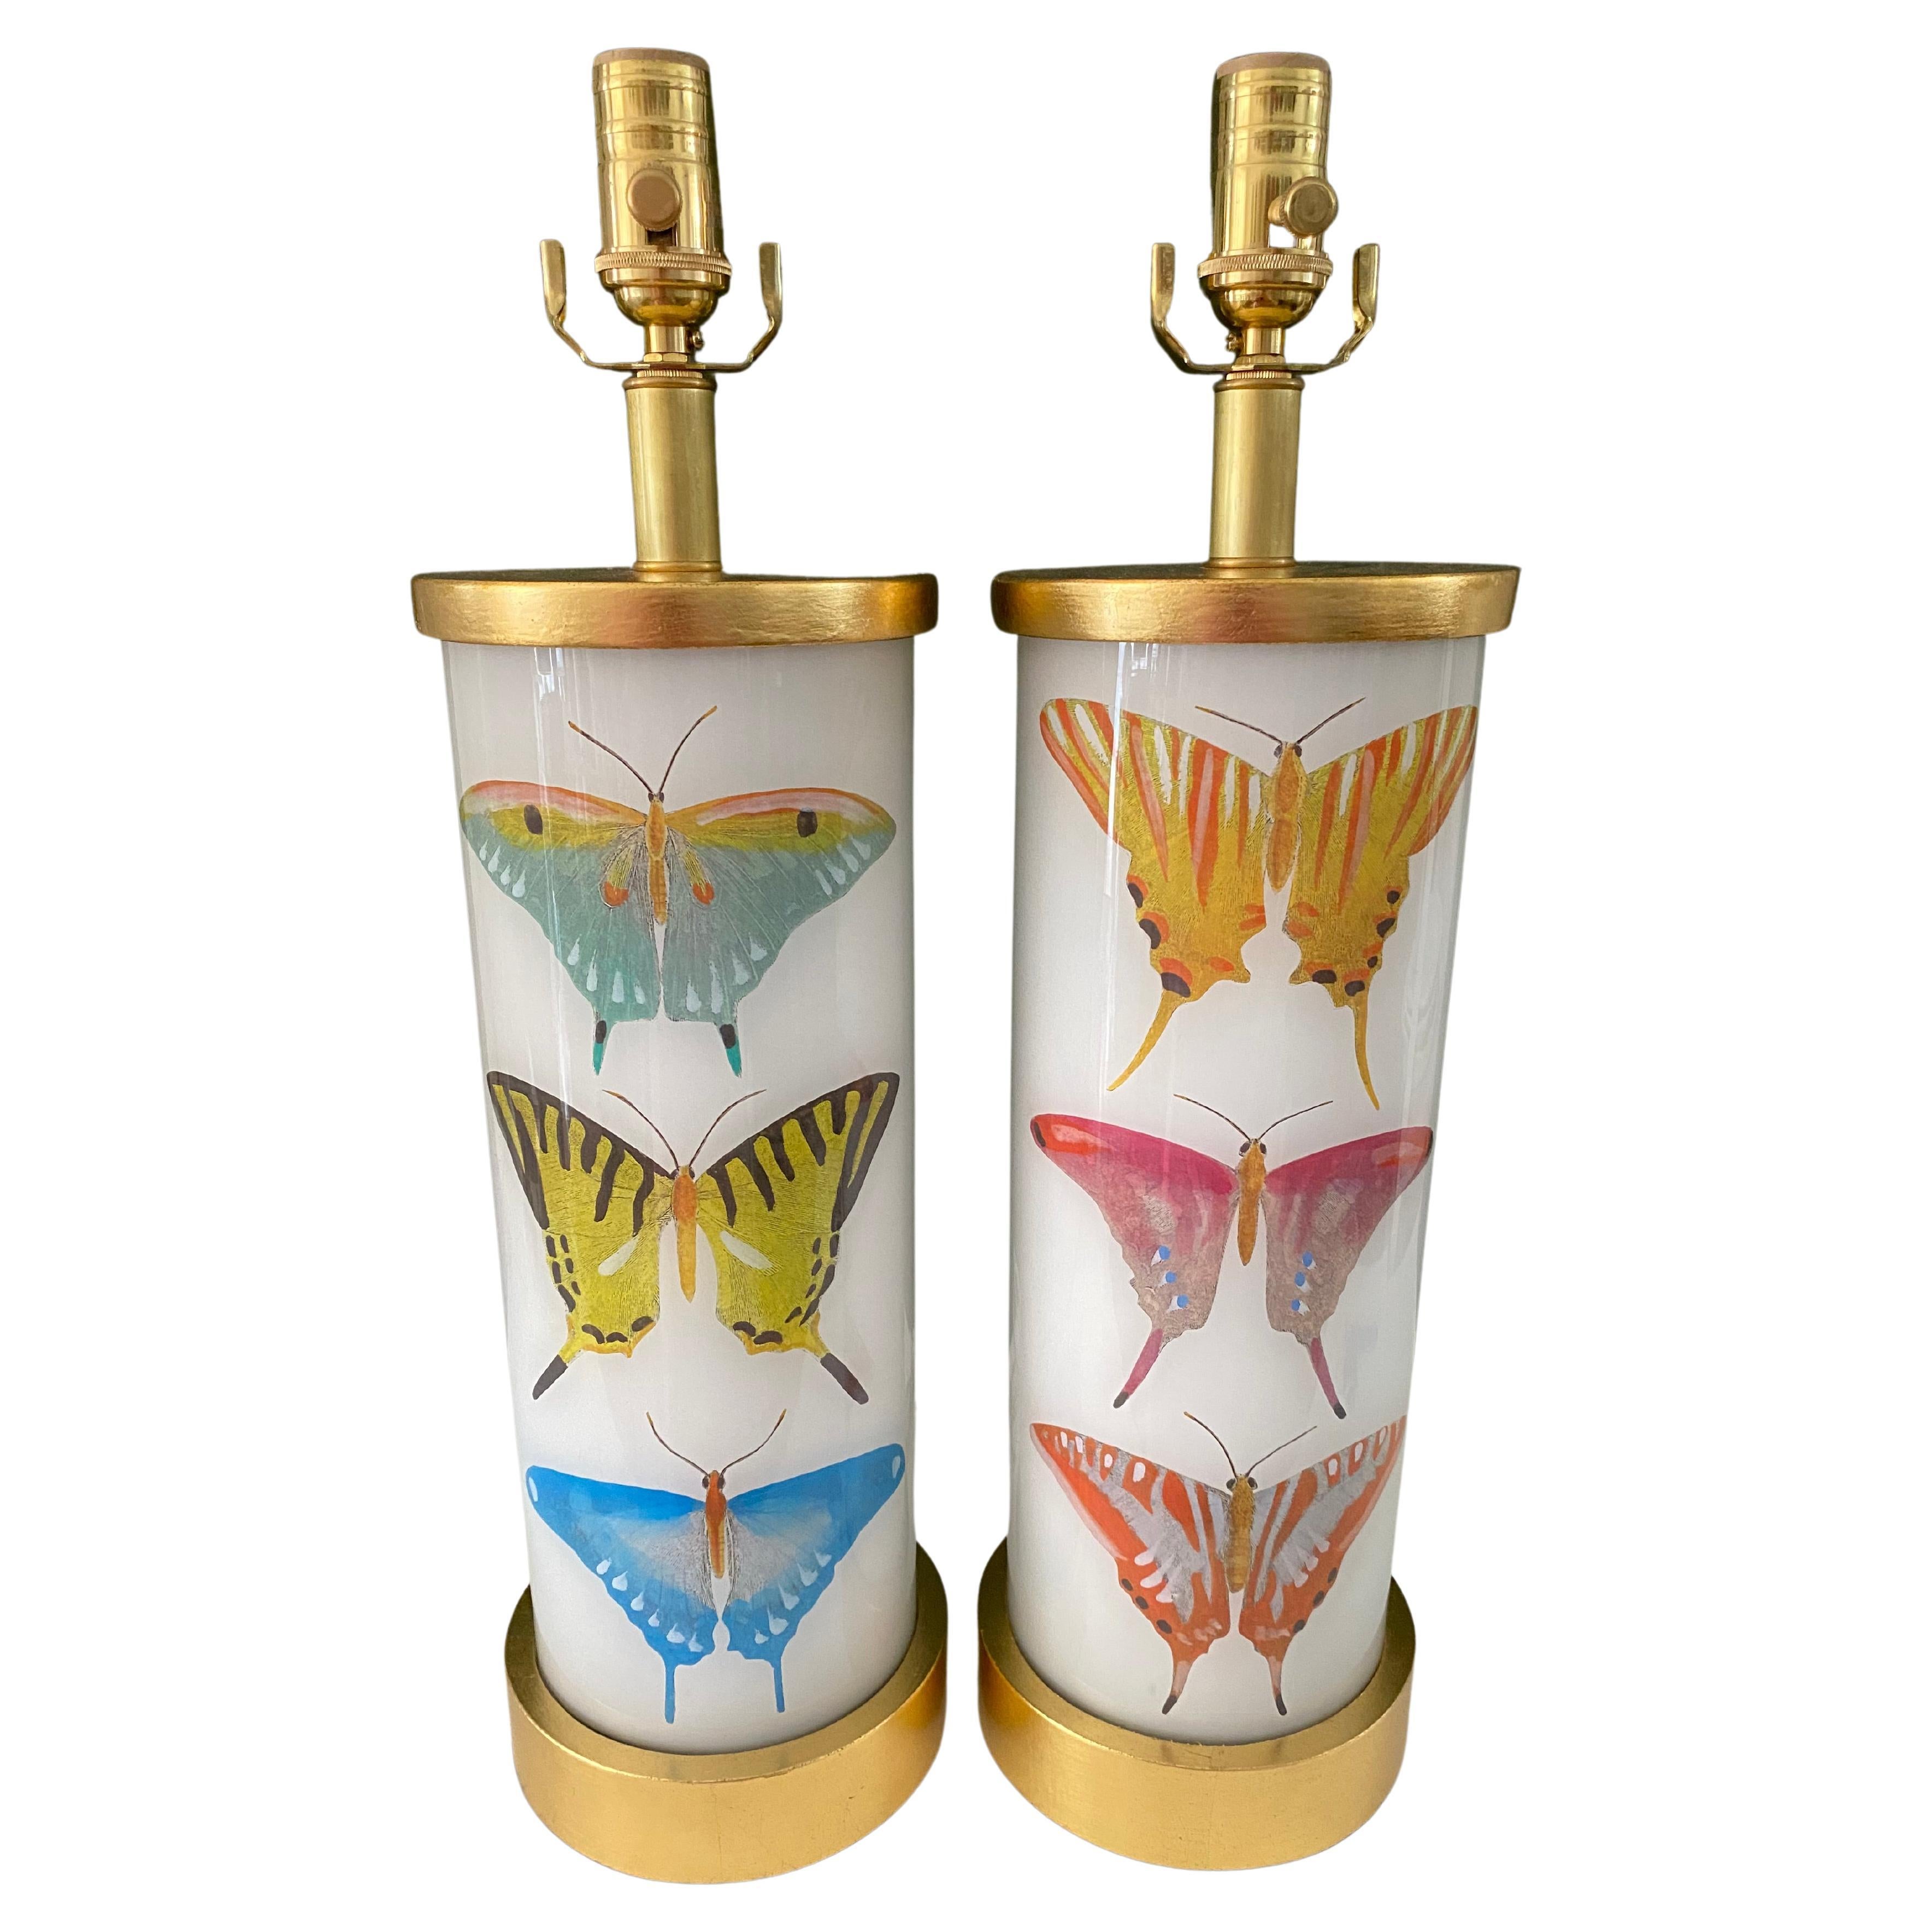 Liz Marsh Designs Pair of Decoupage Butterfly Study Lamps